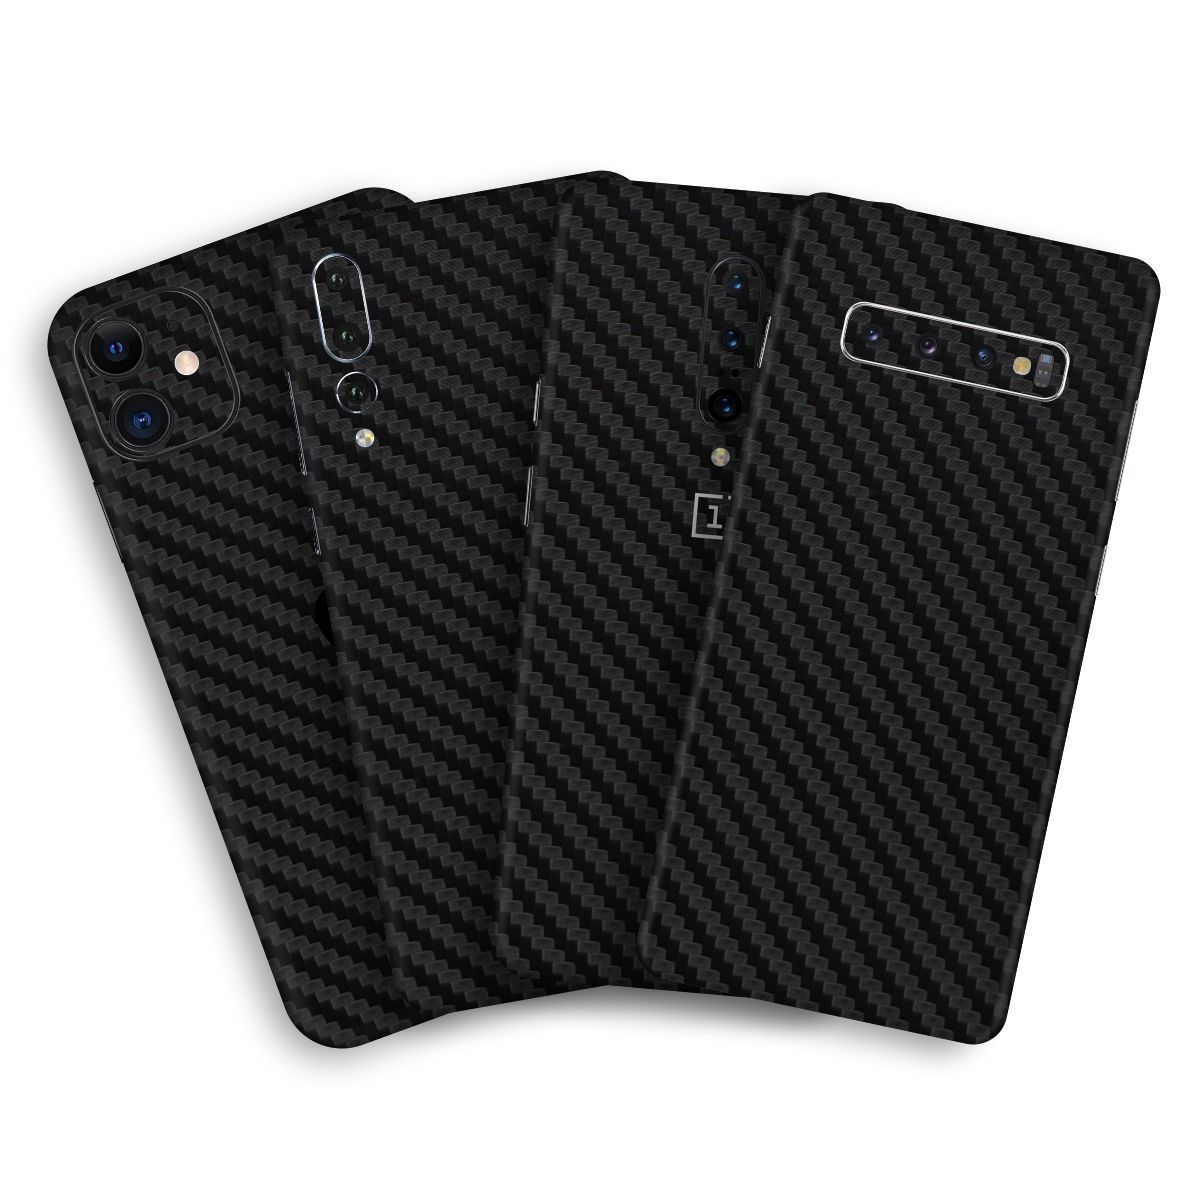 Black Carbon Mobile Skin / Mobile Wrap for Motorola Moto Z2 Play